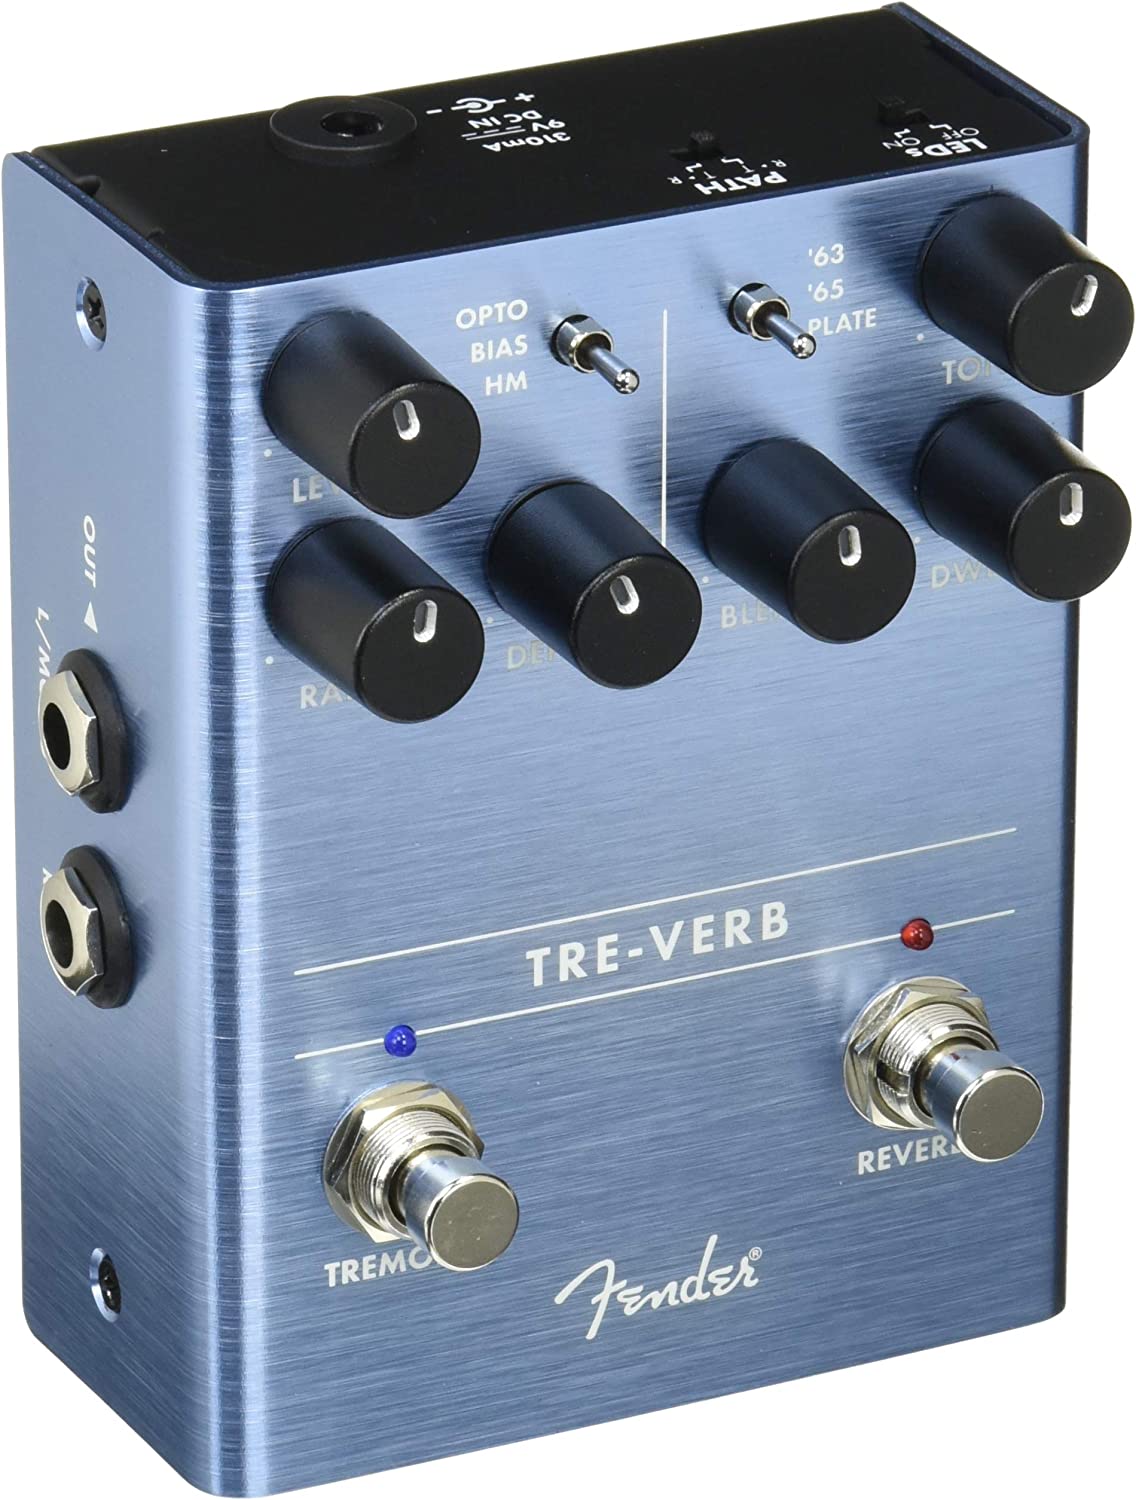 Fender Tre-Verb Digital Reverb/Tremolo Pedal on a white background